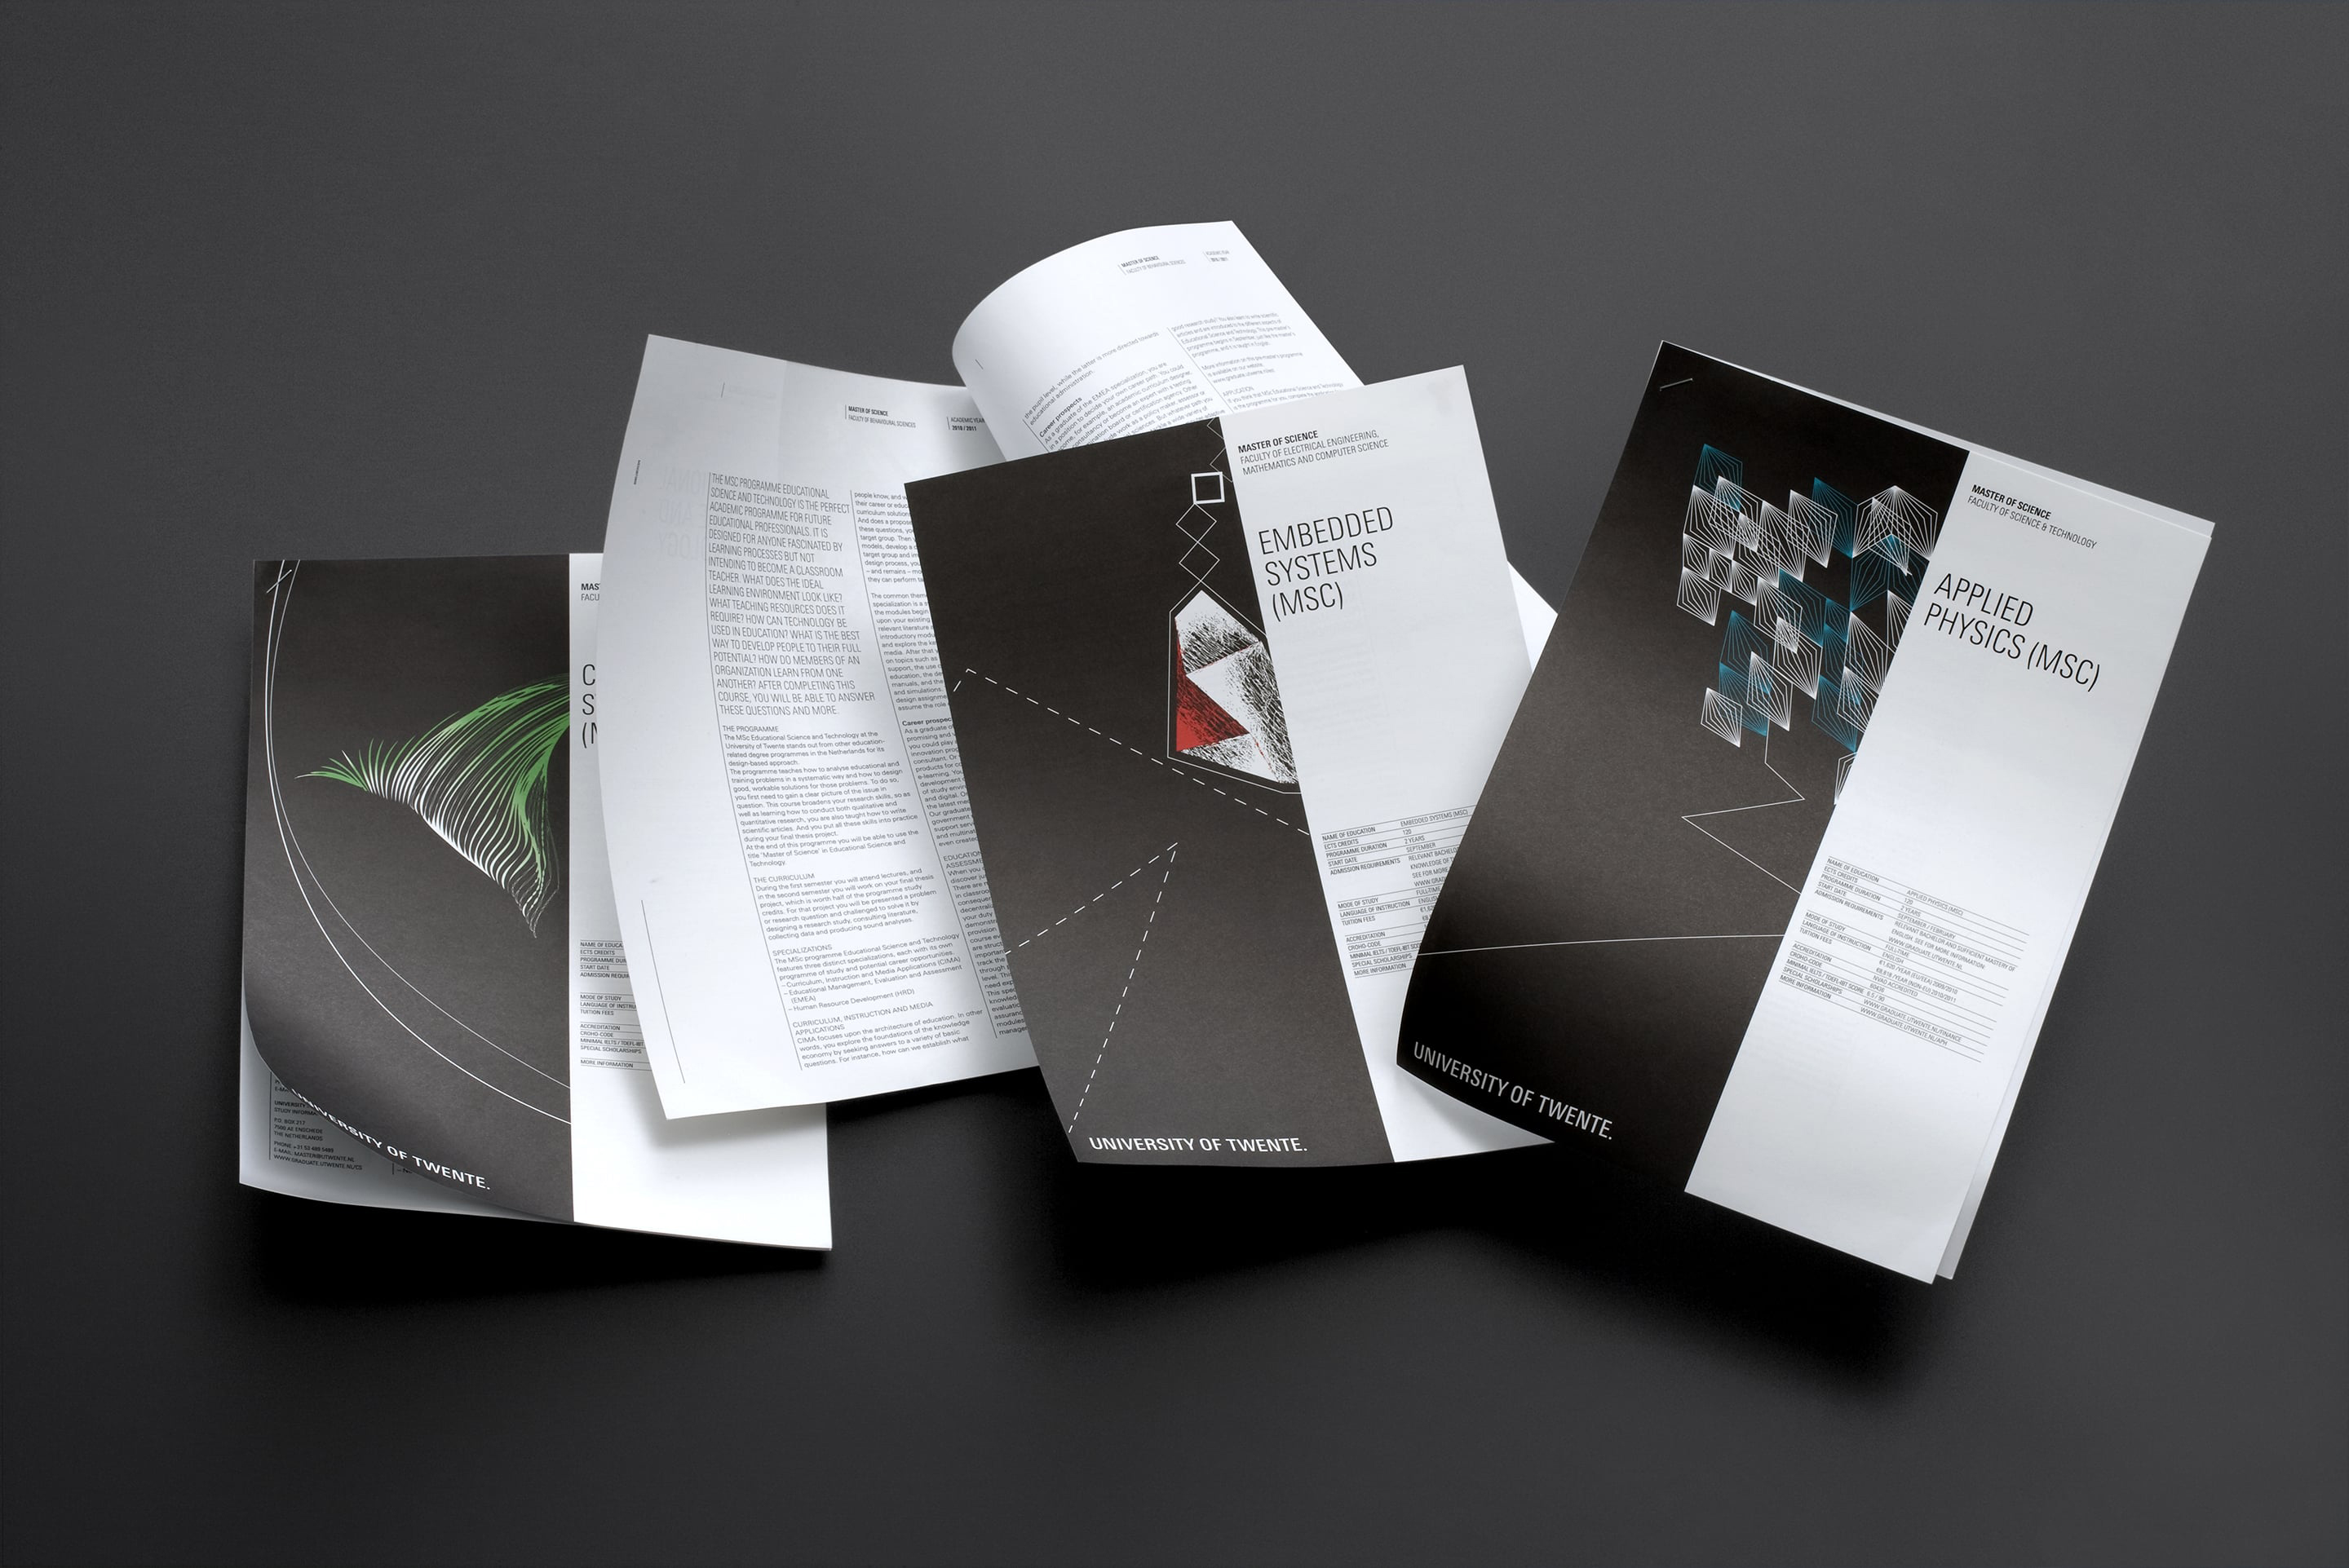 studio dumbar design visual brand identity for University of Twente information flyers masters program with universe